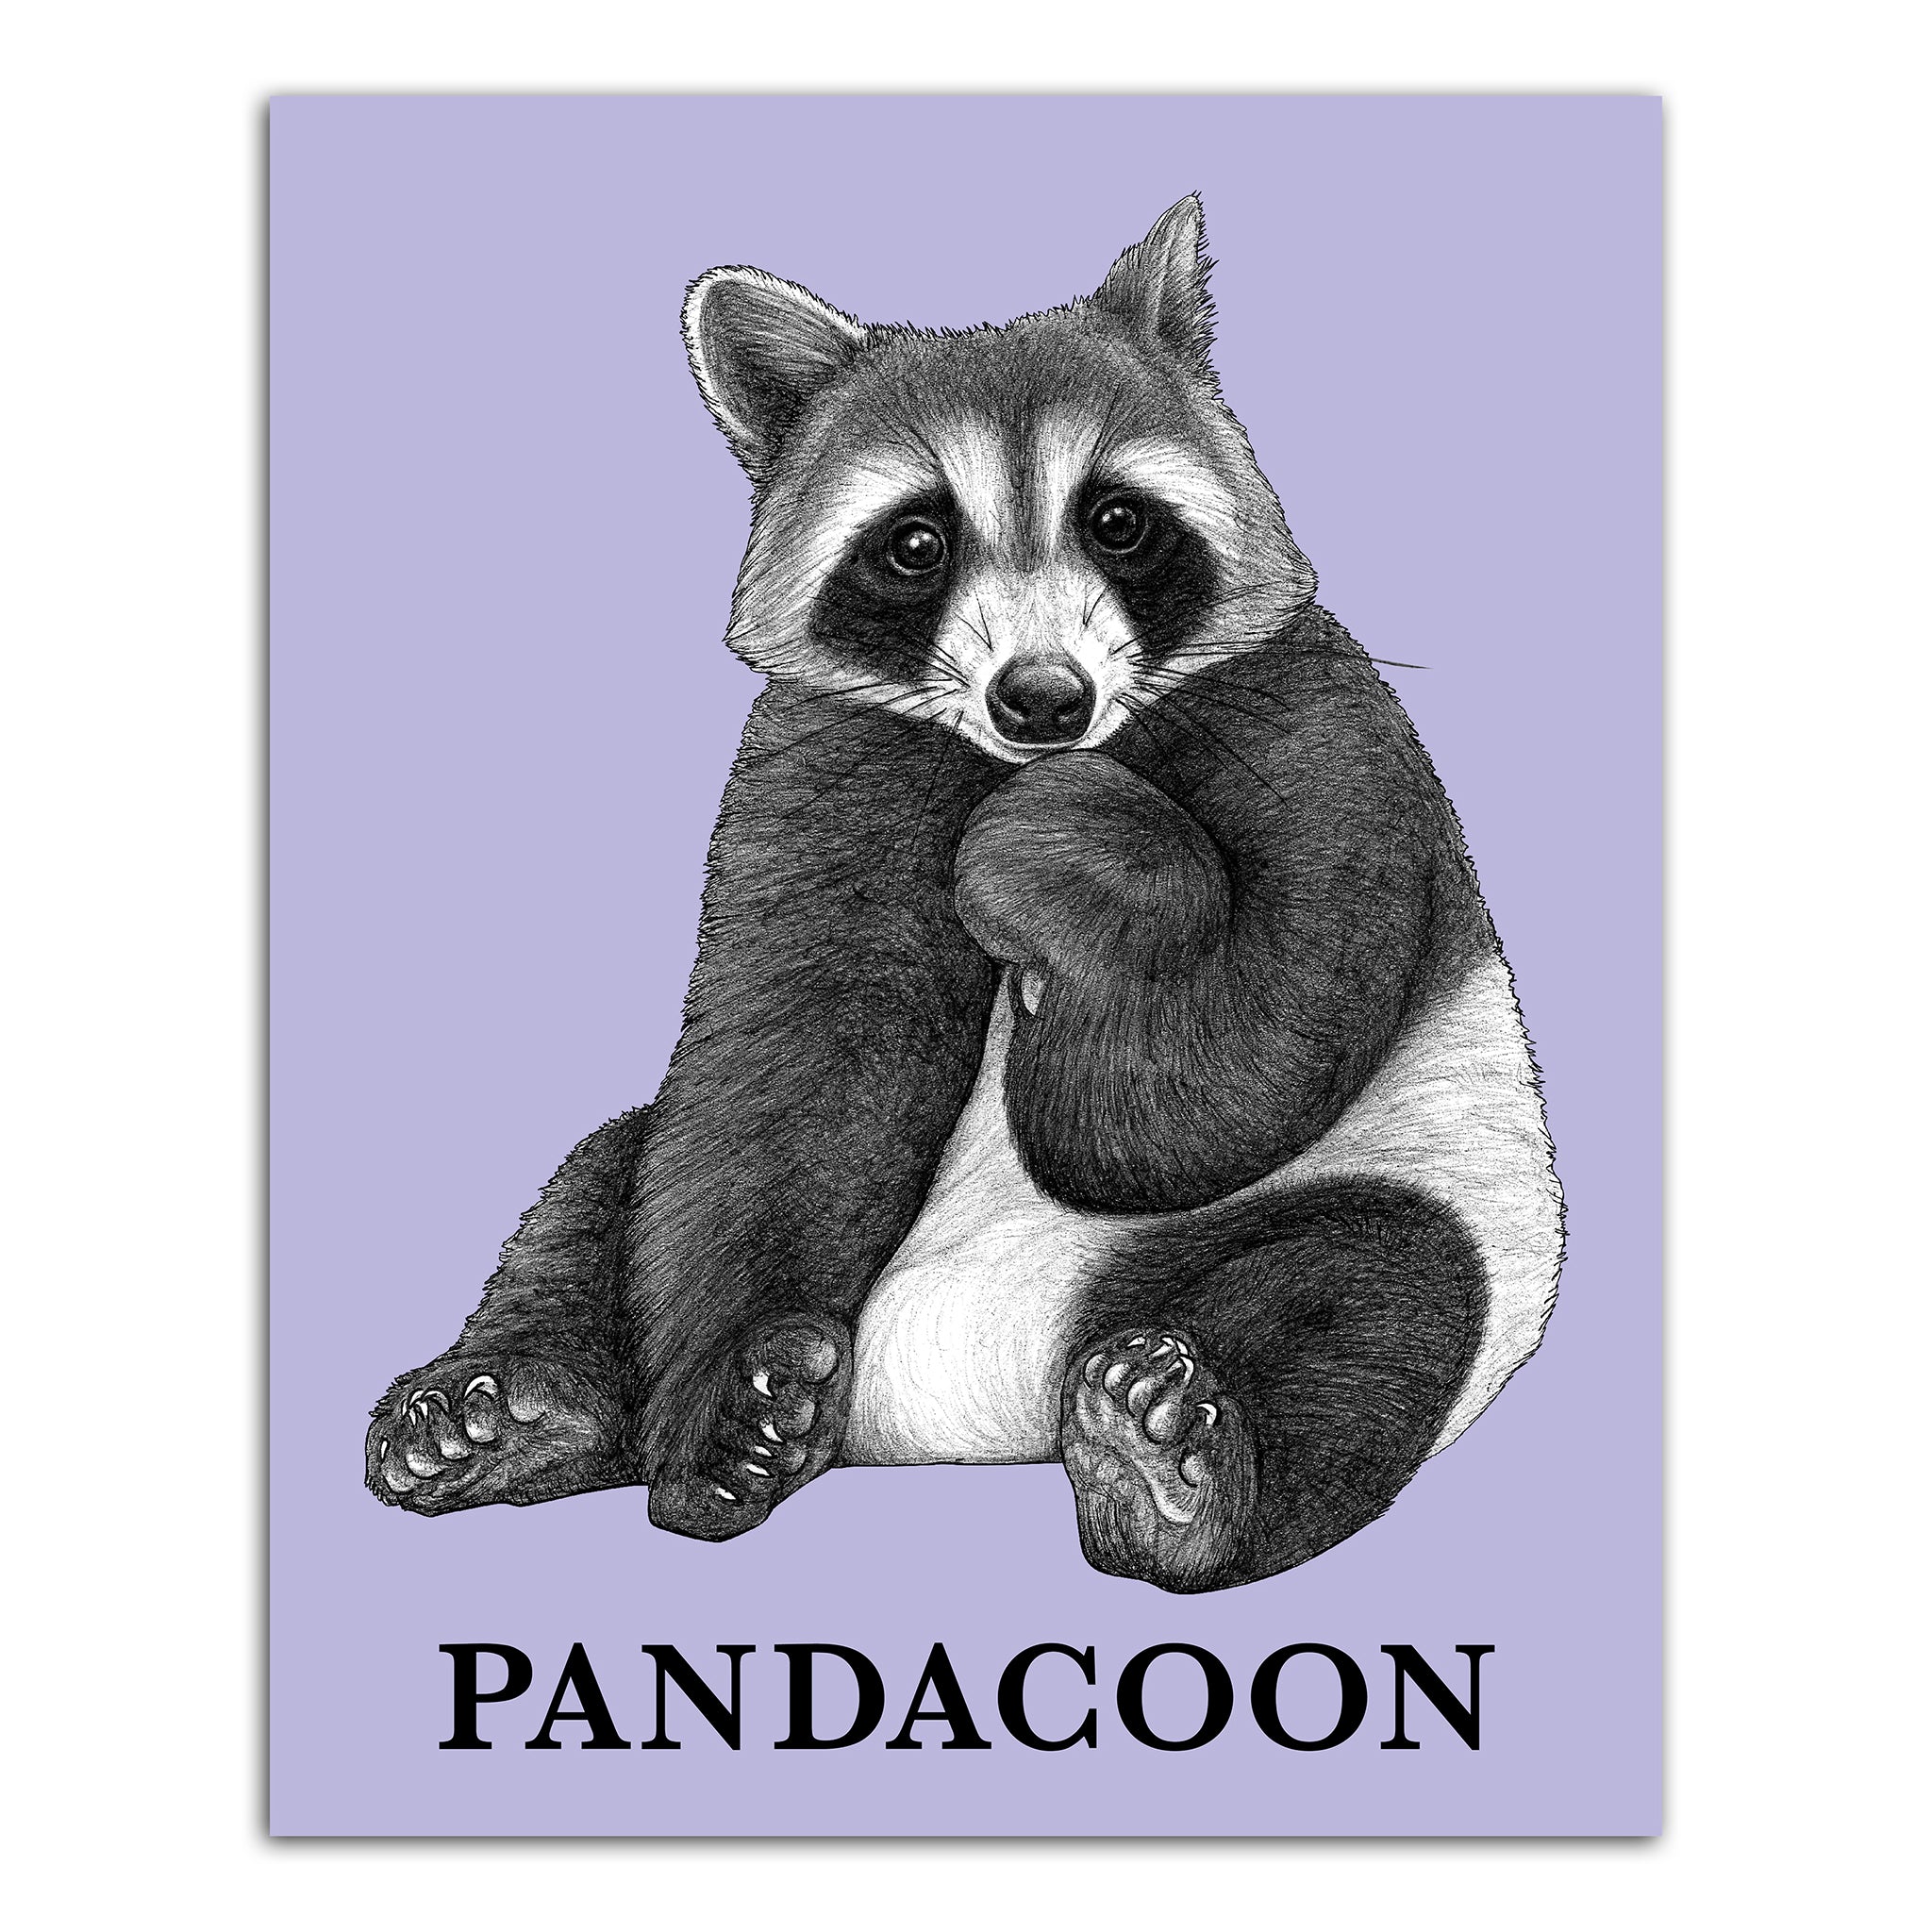 Pandacoon | Panda + Raccoon Hybrid Animal | 8x10" Color Print